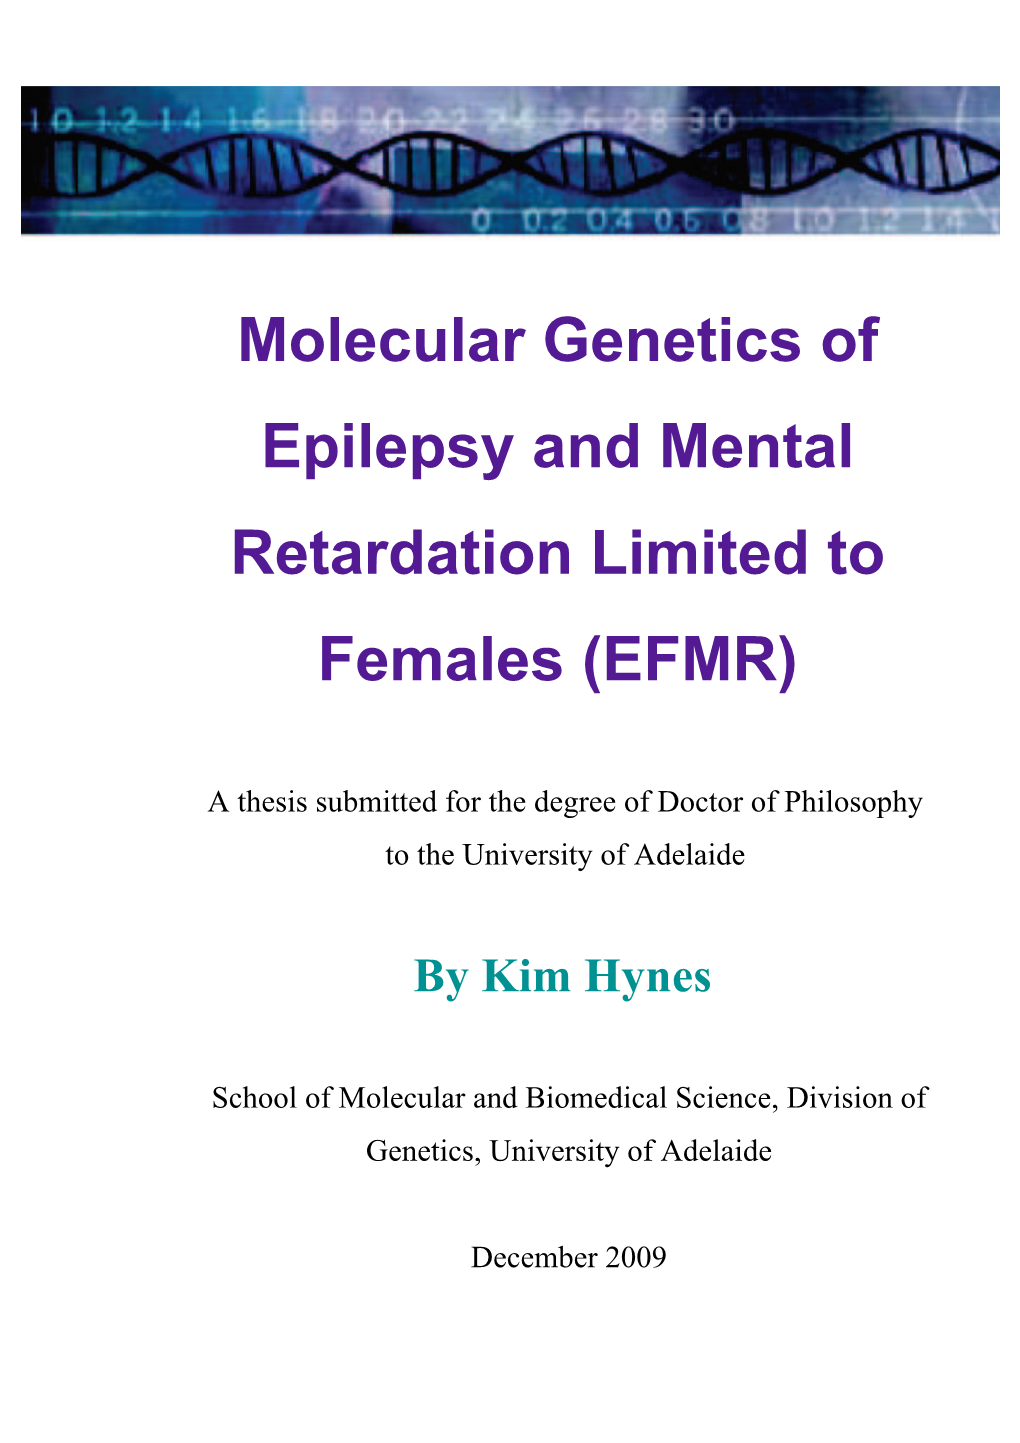 Molecular Genetics of Epilepsy and Mental Retardation Limited to Females (EFMR)